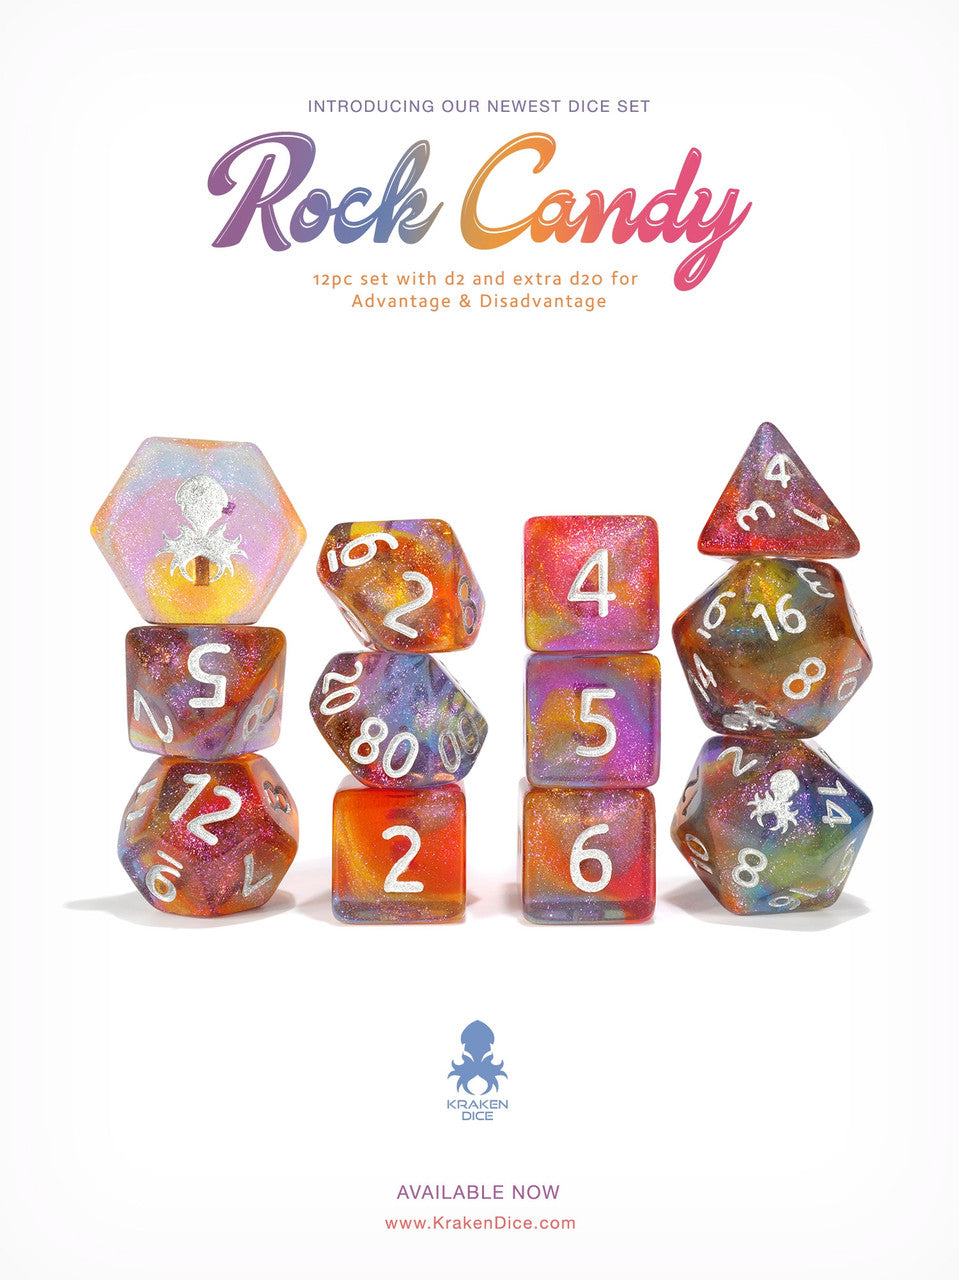 Kraken's Rock Candy 12pc Polyhedral Dice Set